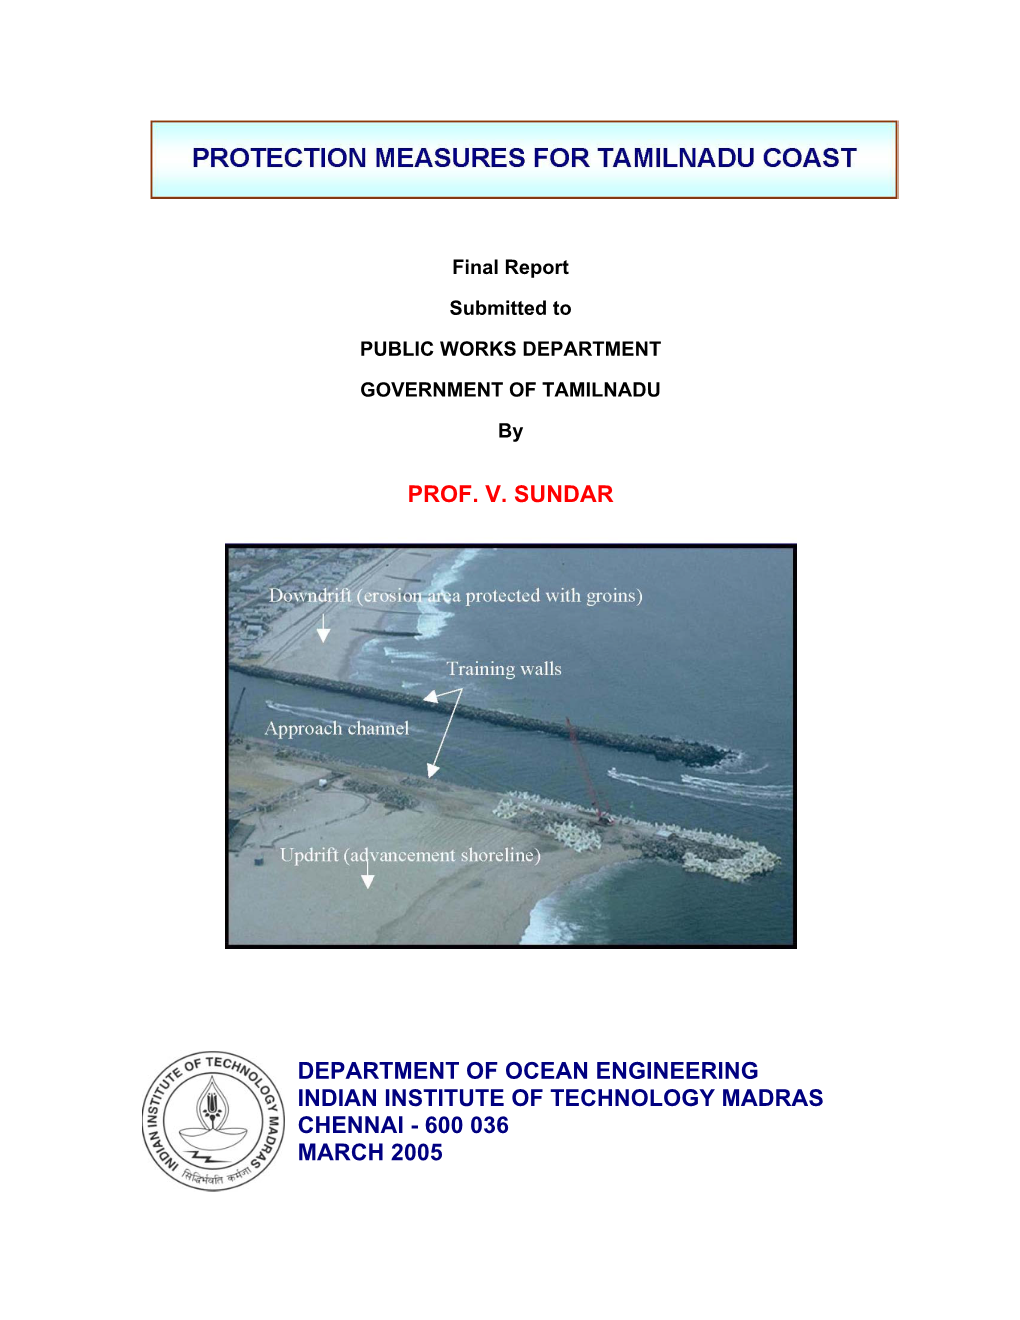 Protection Measures for Tamil Nadu Coast-2005